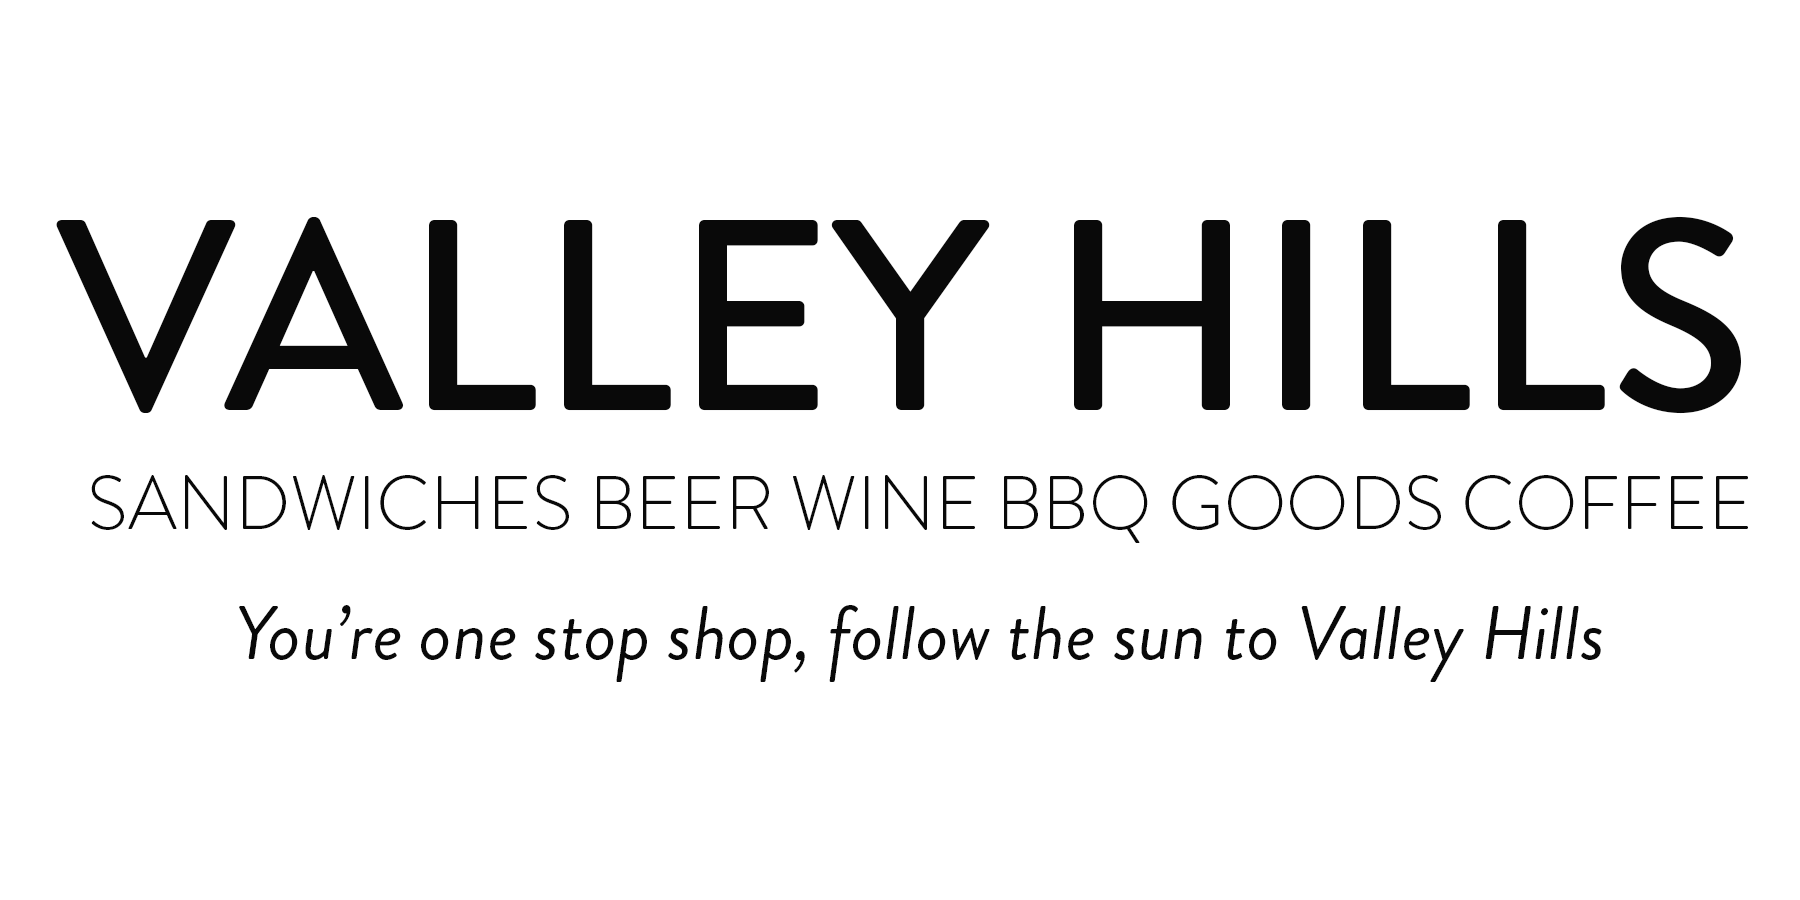 Valley Hills Deli BBQ & Wine Shop